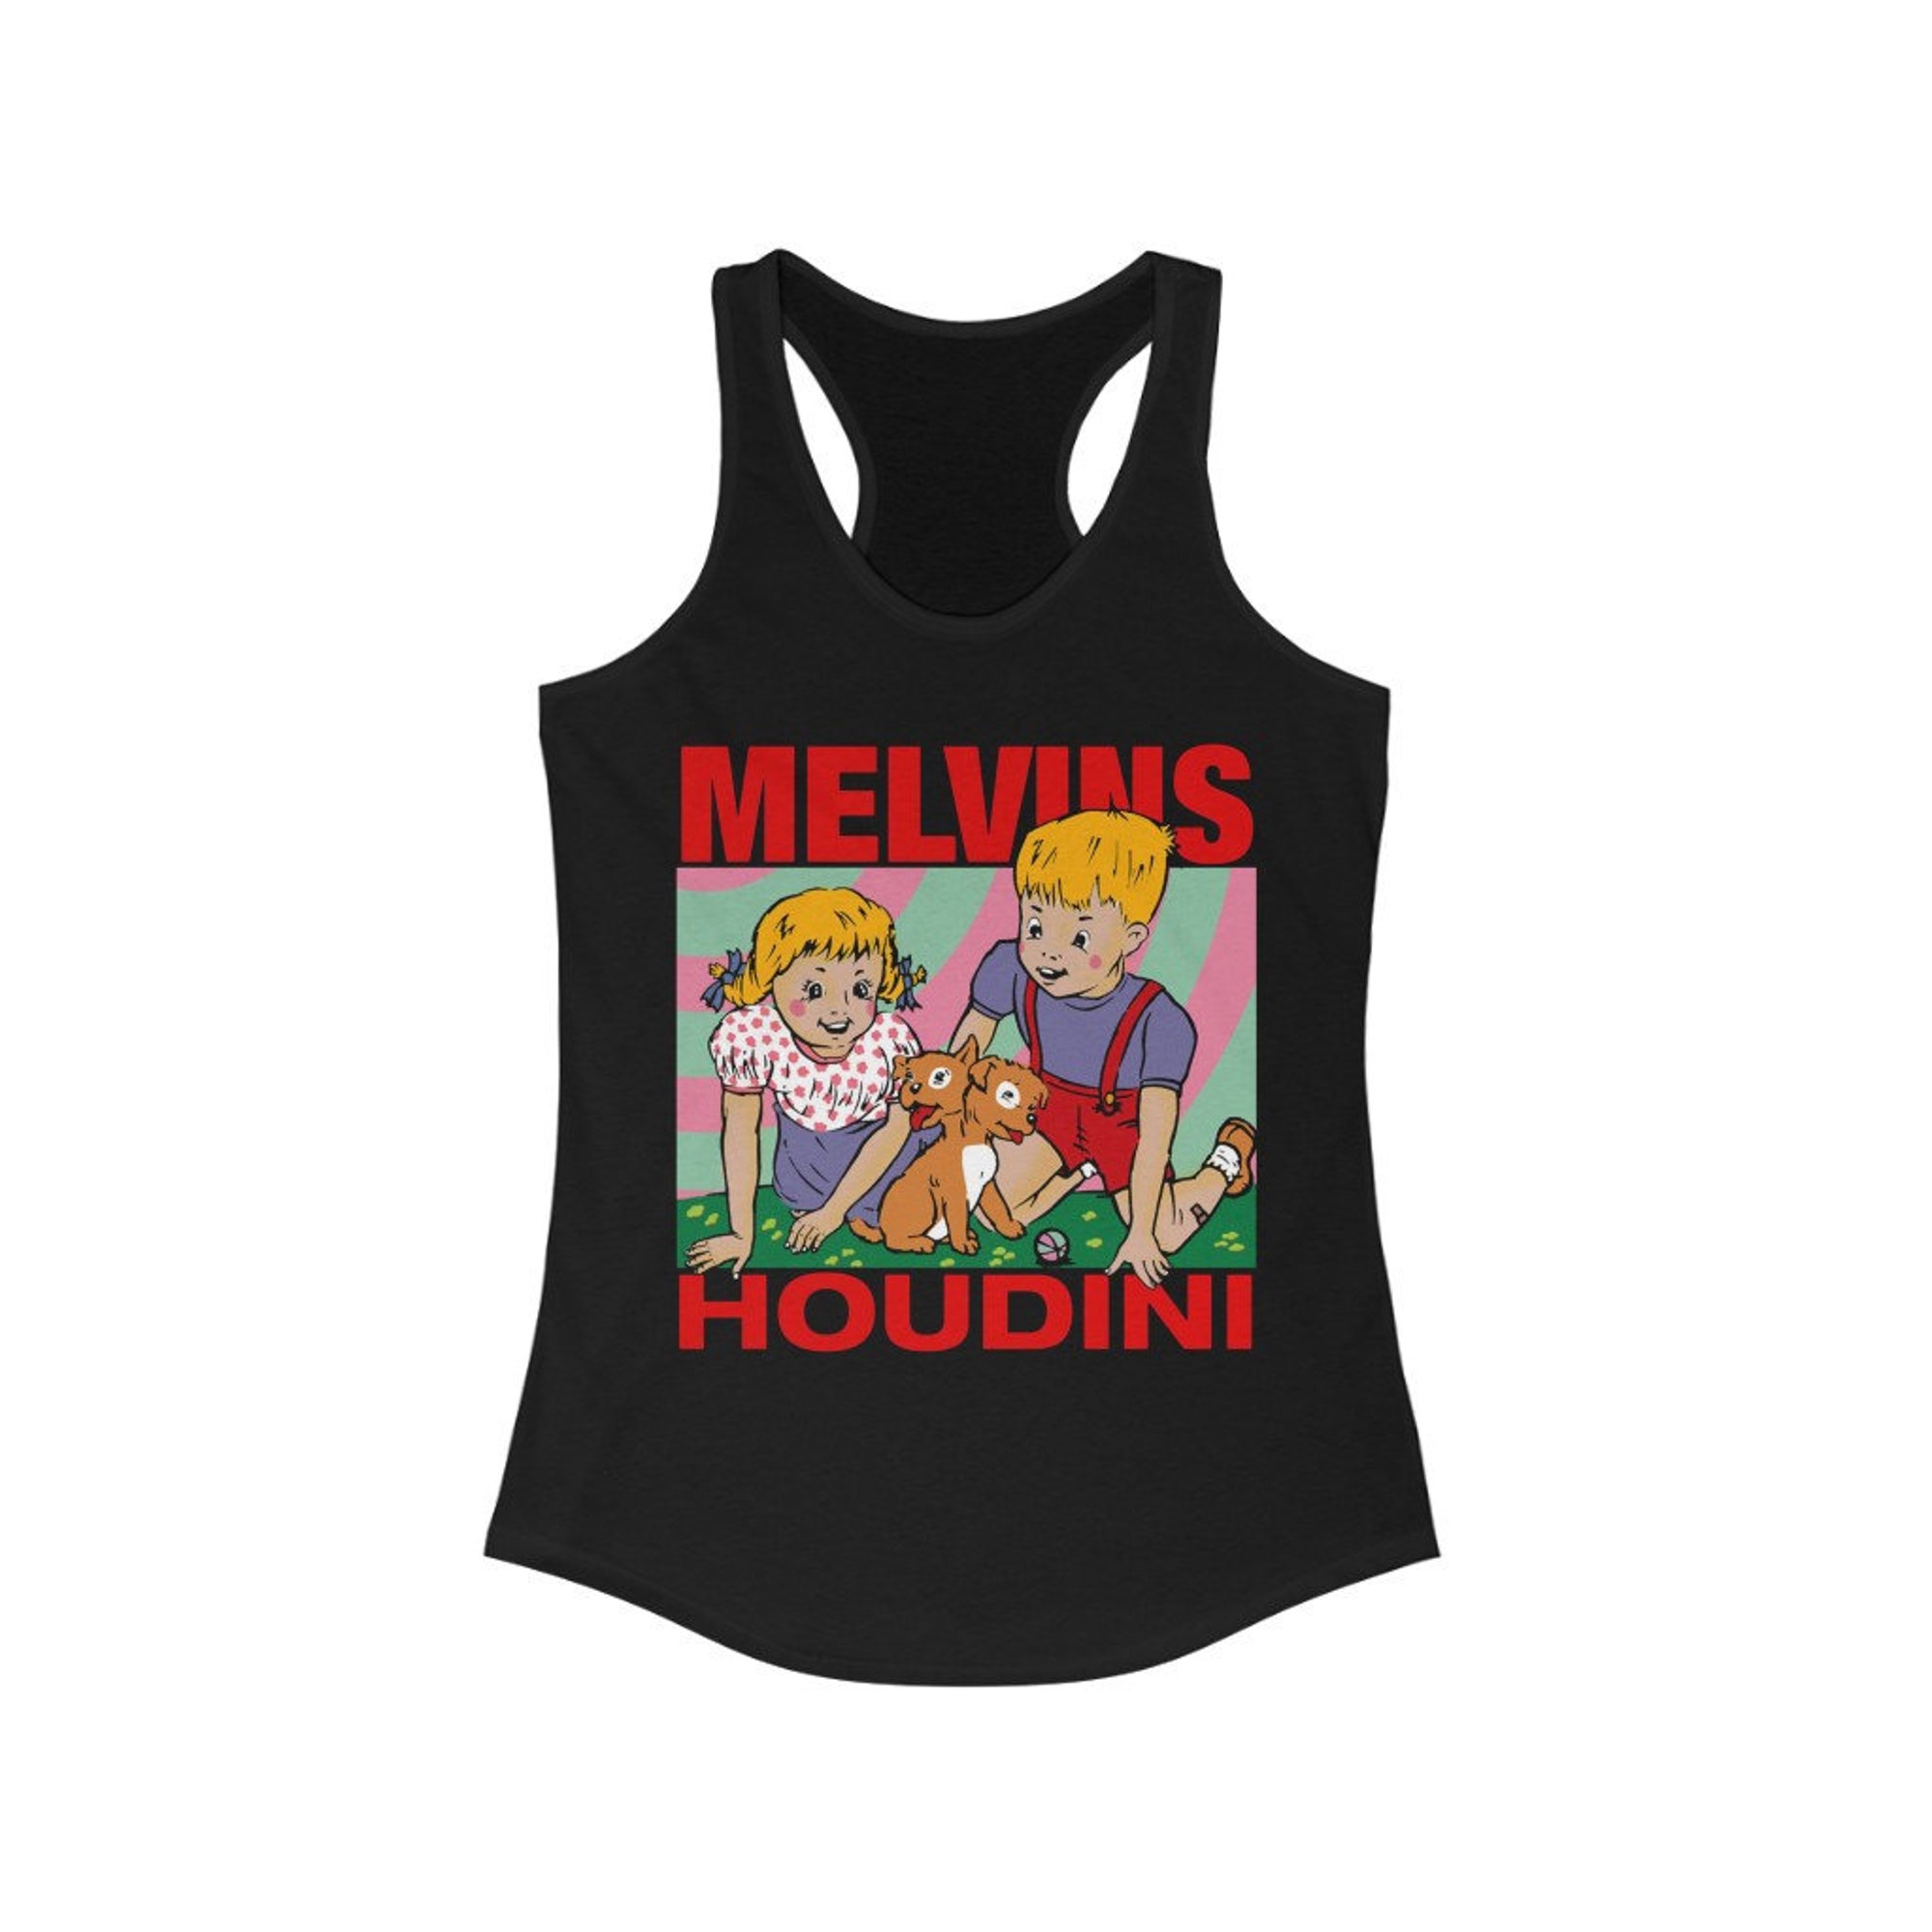 Discover Melvins - Houdini Womens Tank Top, Melvins Sleeveless Tee